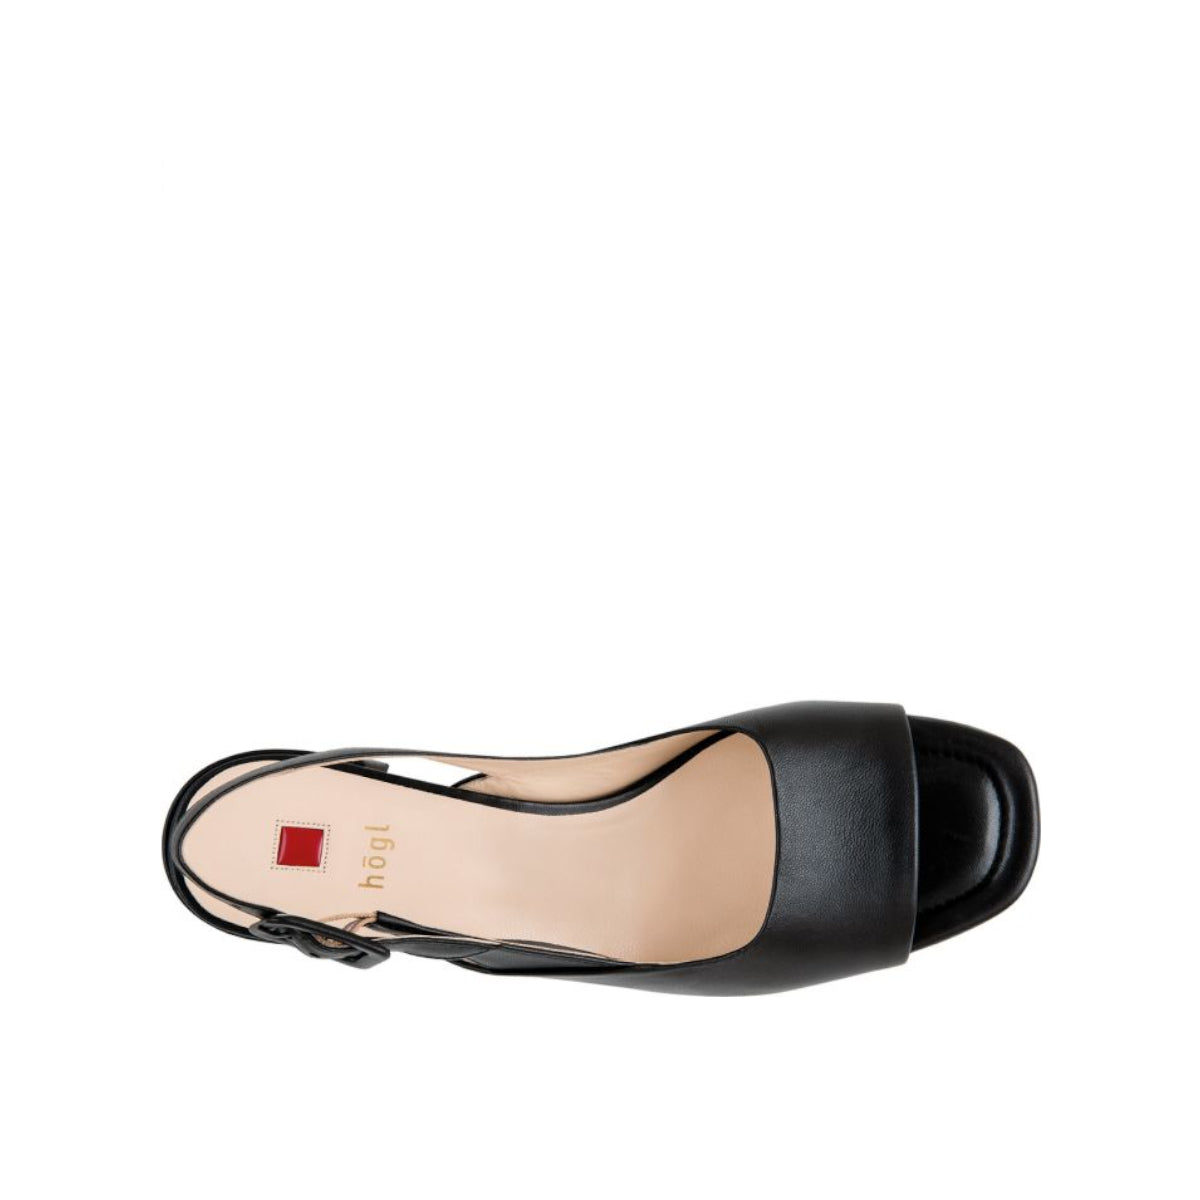 1035 00 - shoe&amp;me - Hogl - Sandal - Heels, Sandal, Summer 2021, Womens